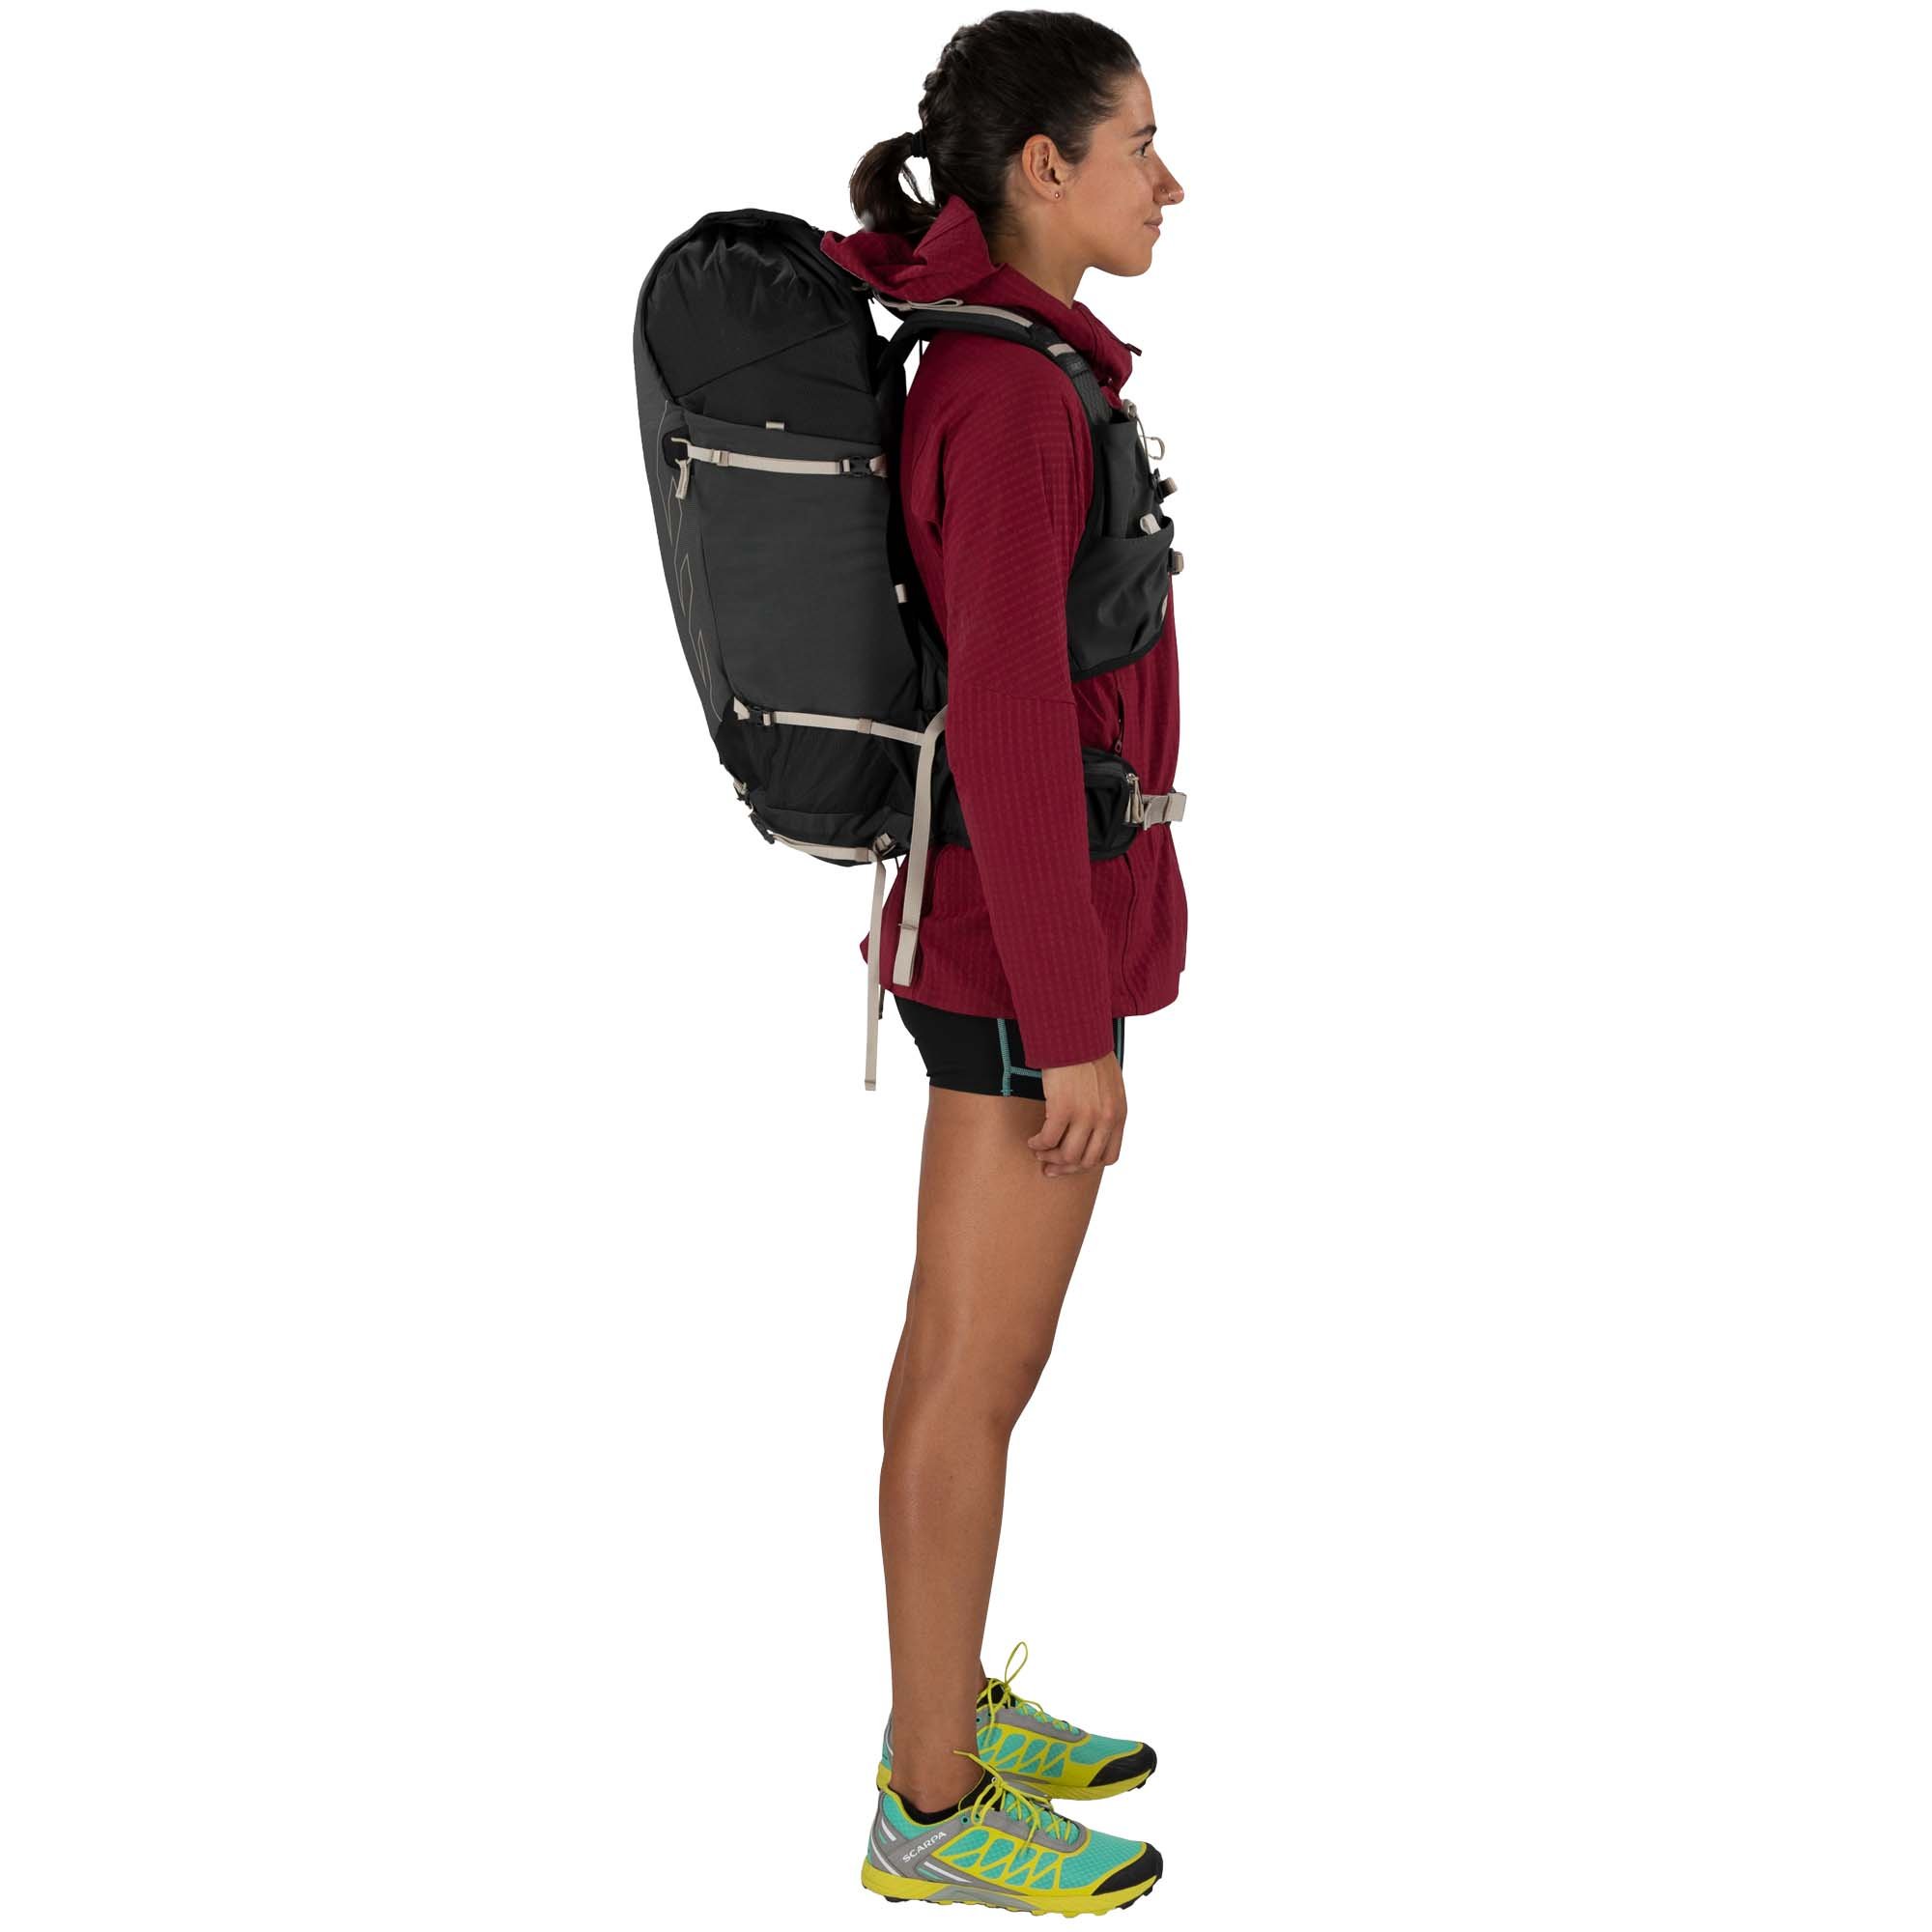 Osprey Tempest Velocity 30 Women's Technical Backpack